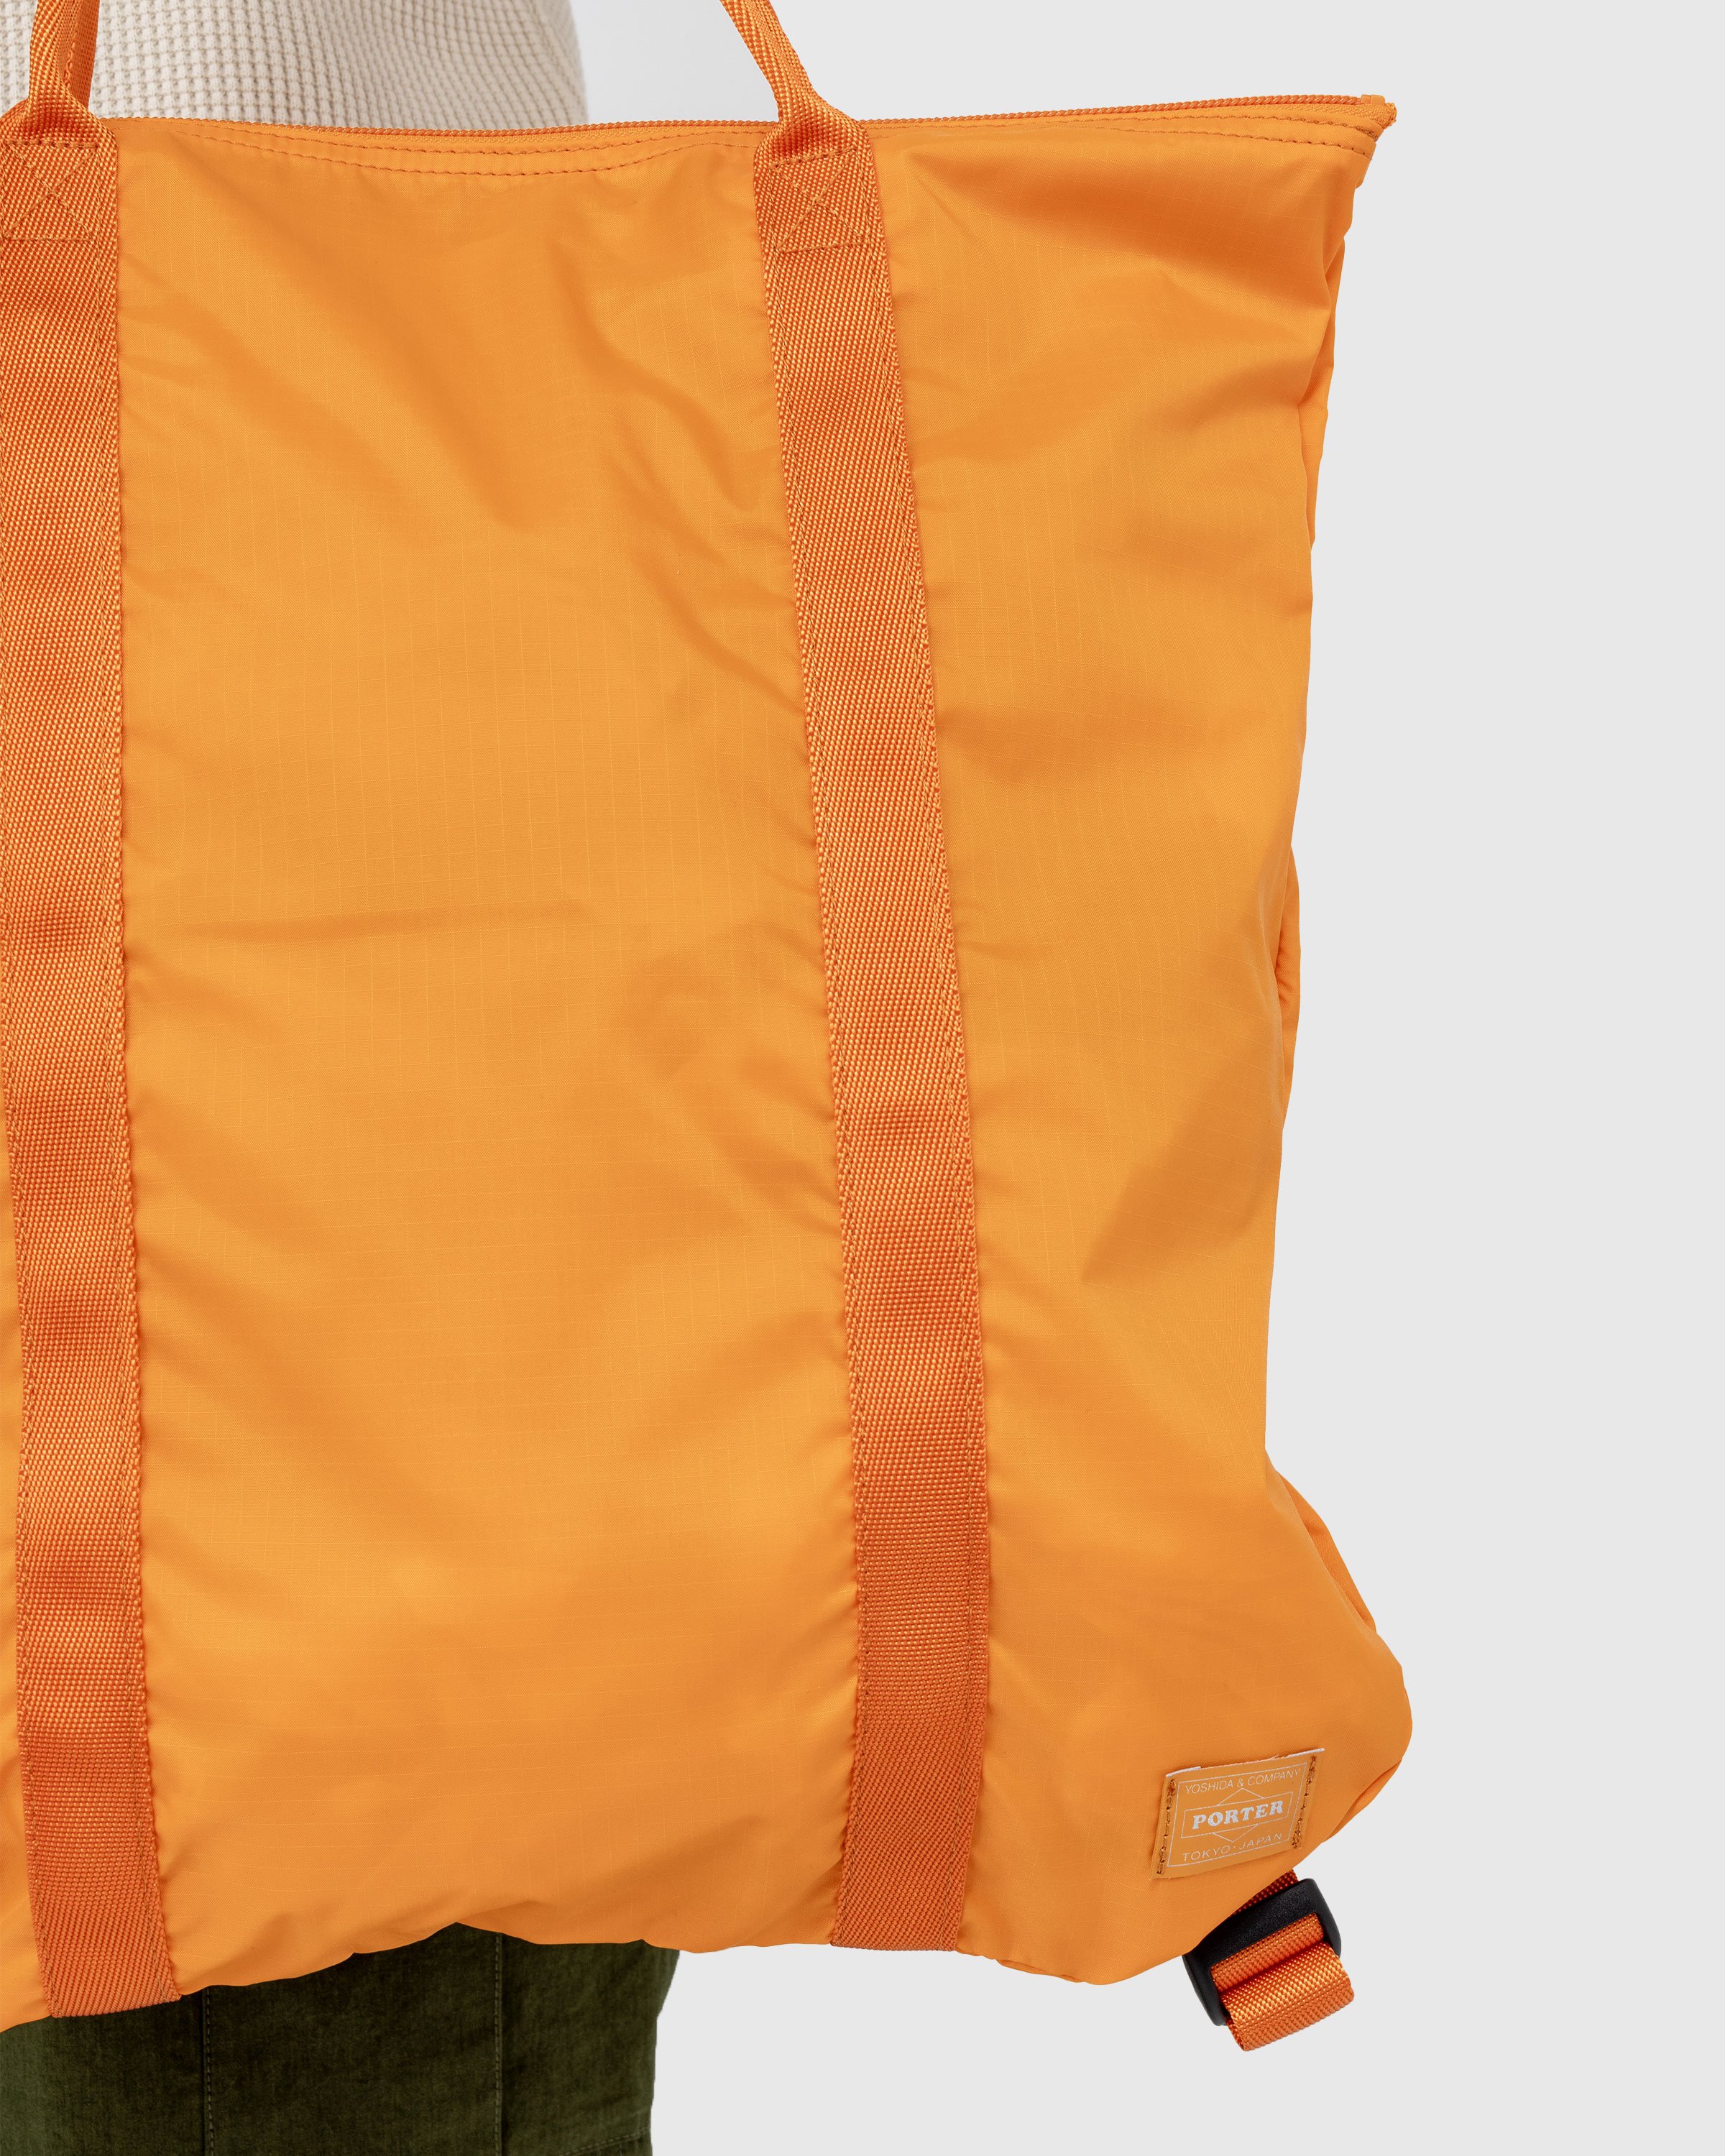 Porter-Yoshida & Co. - Flex 2-Way Tote Bag Orange - Accessories - Orange - Image 5